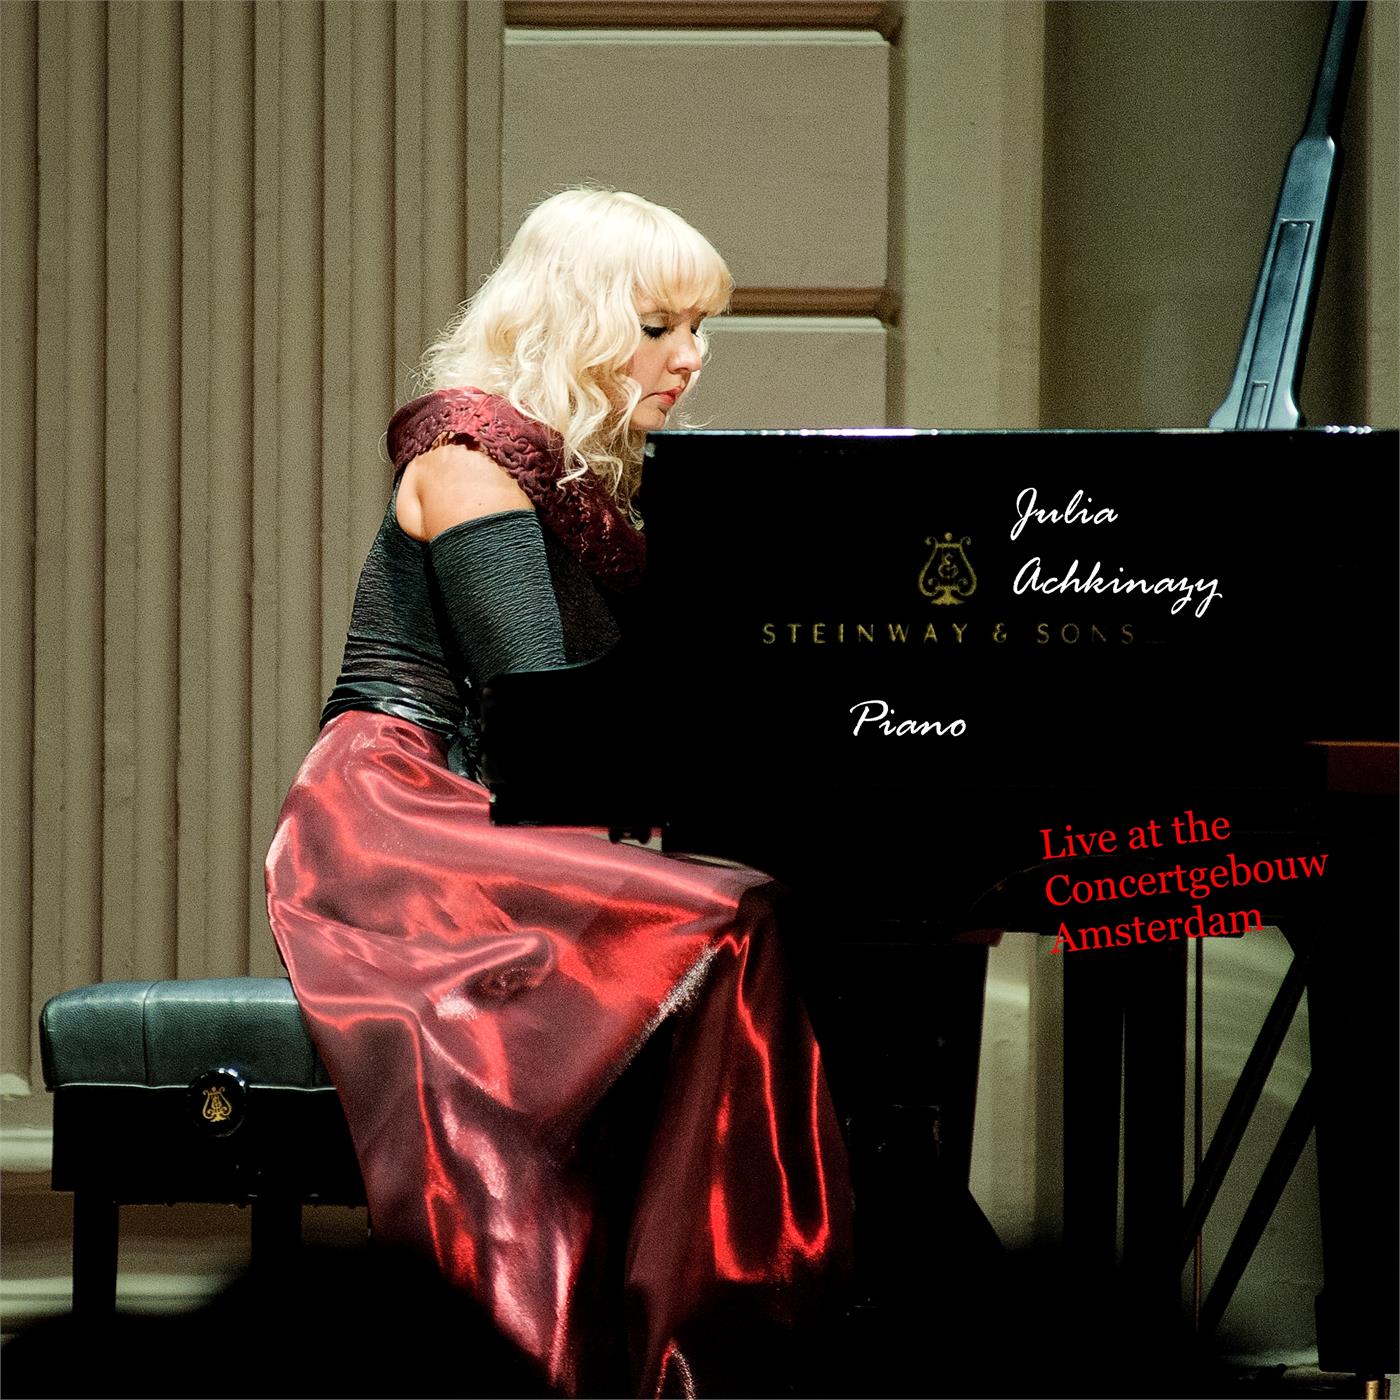 Julia Achkinazy Live at Concertgebouw Amsterdam